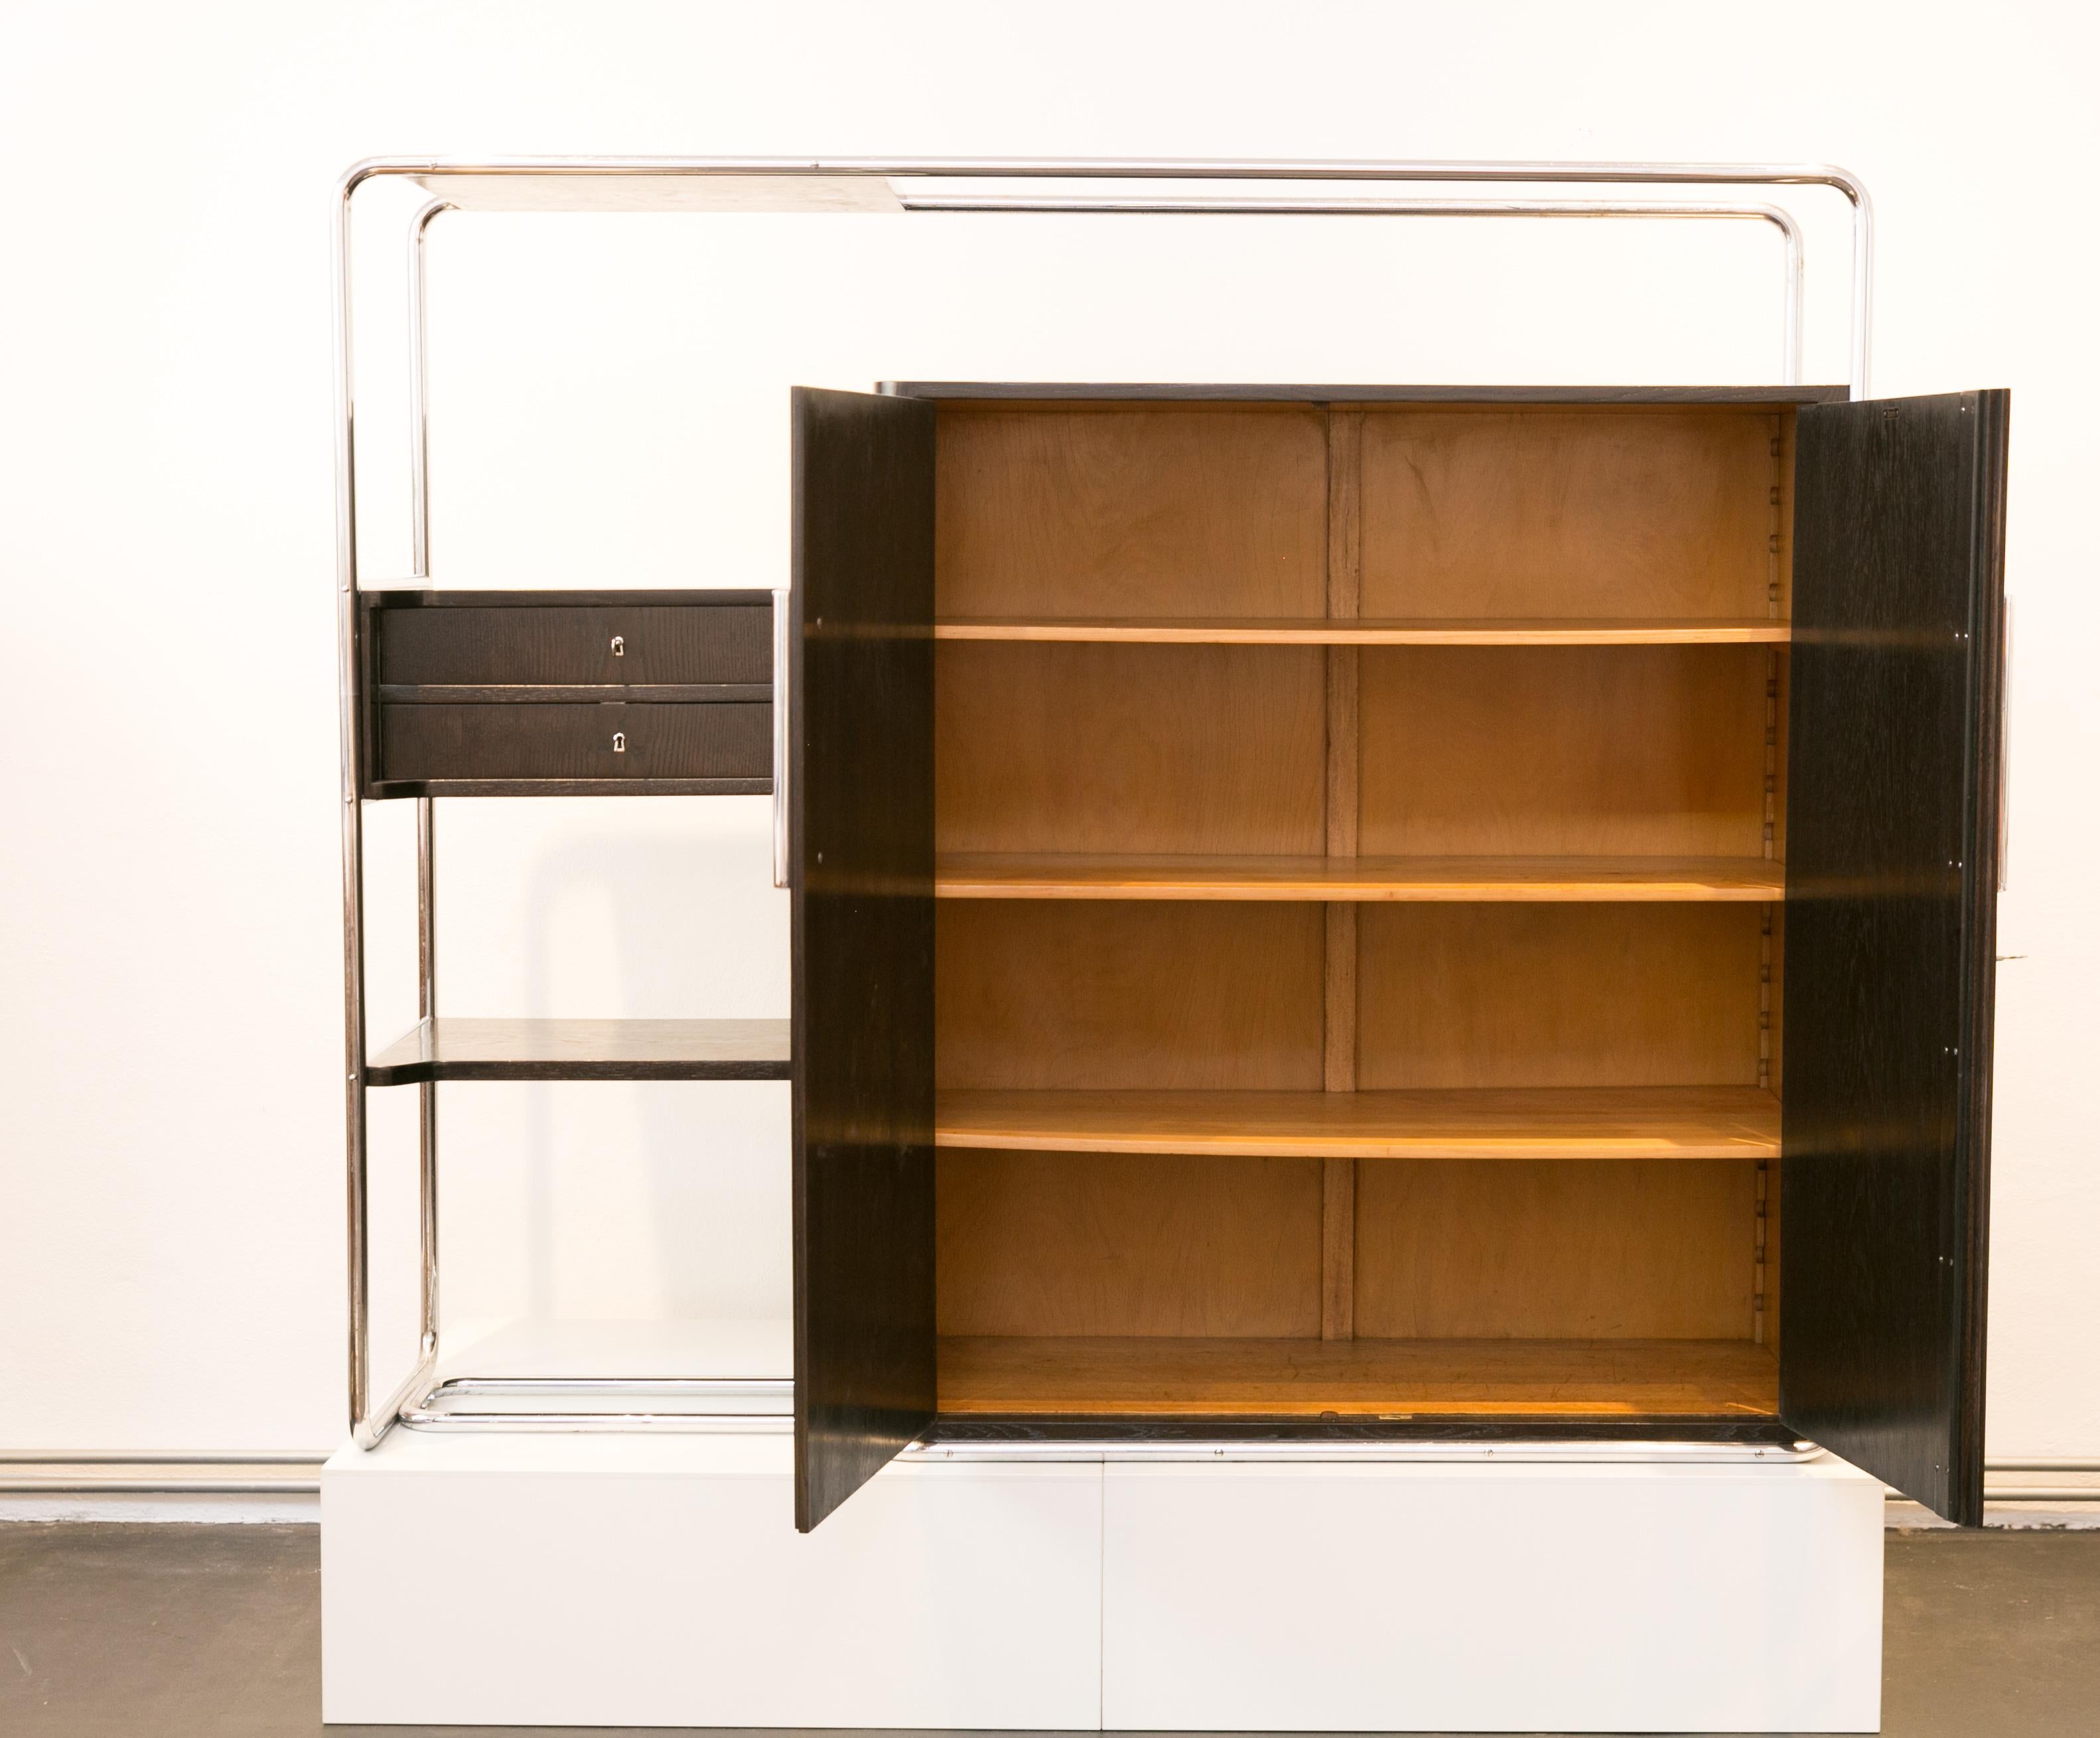 German Rare Bauhaus Cabinet B-290 by Bruno Weil for Thonet 1932